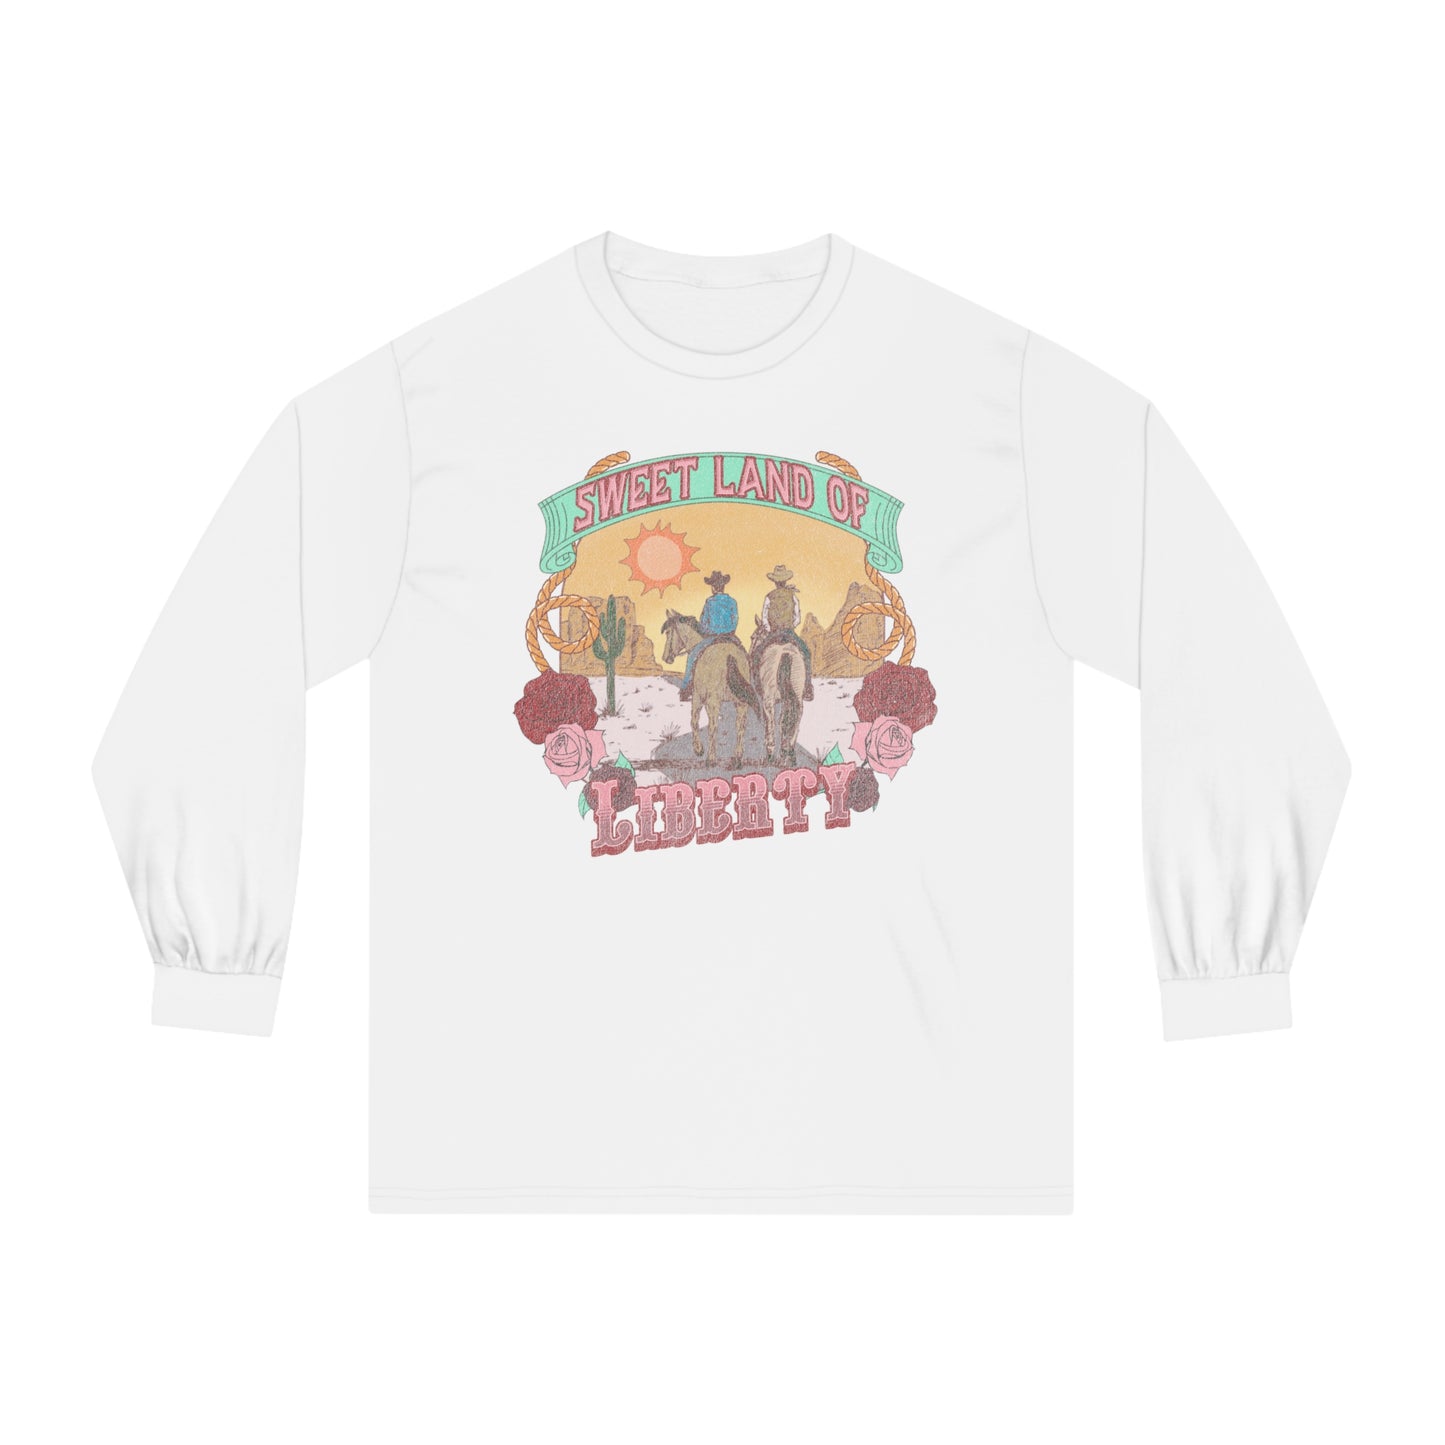 Sweet Land of Liberty - Unisex Classic Long Sleeve T-Shirt